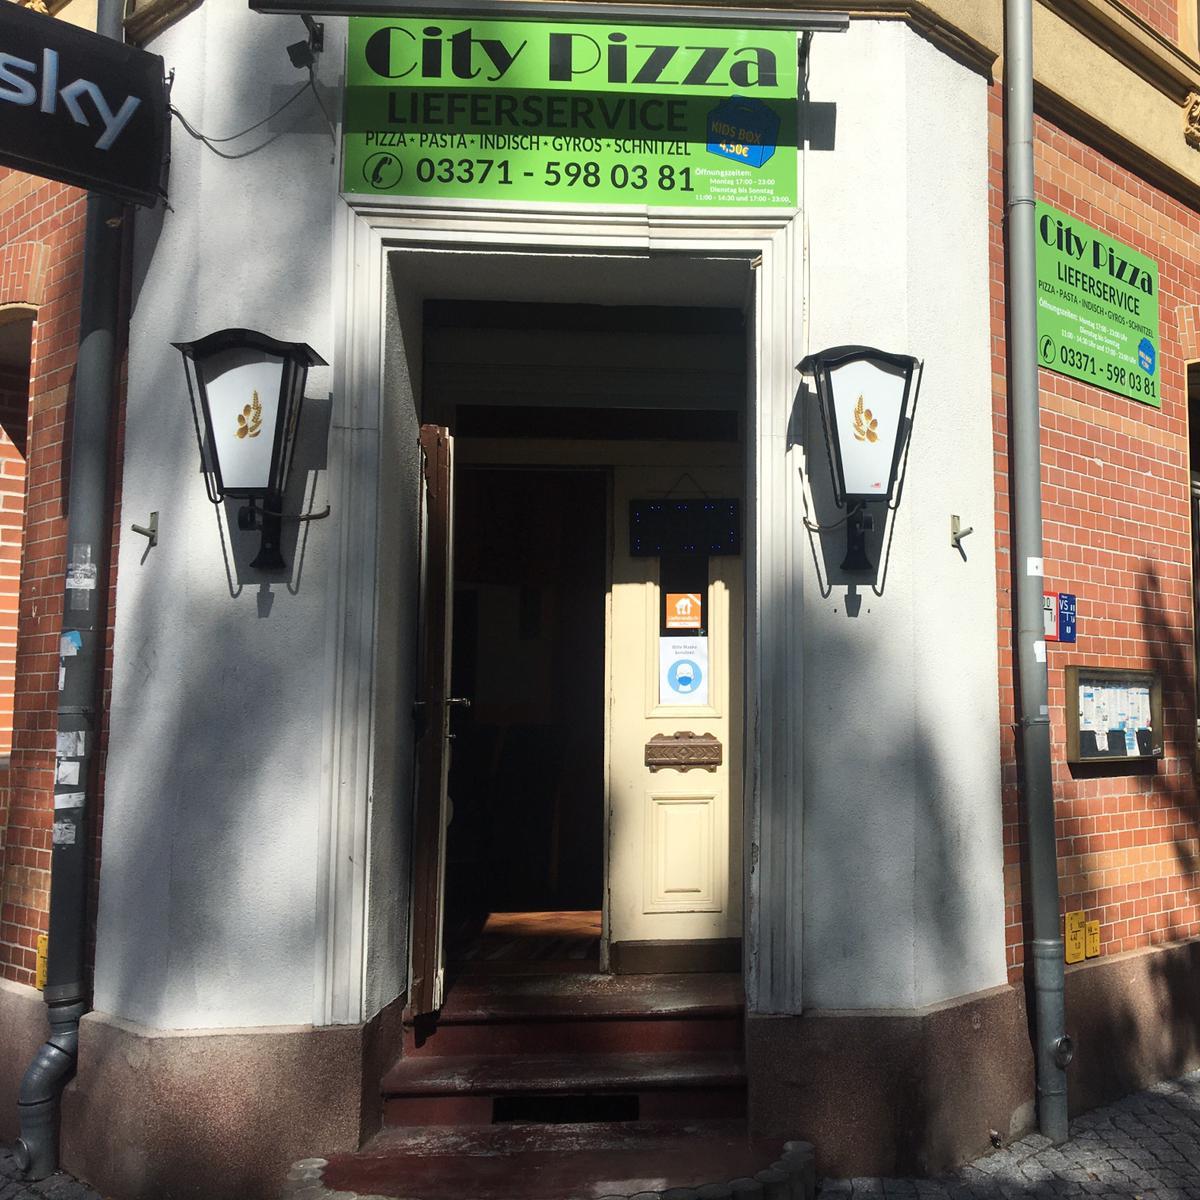 Restaurant "City Pizza" in Luckenwalde